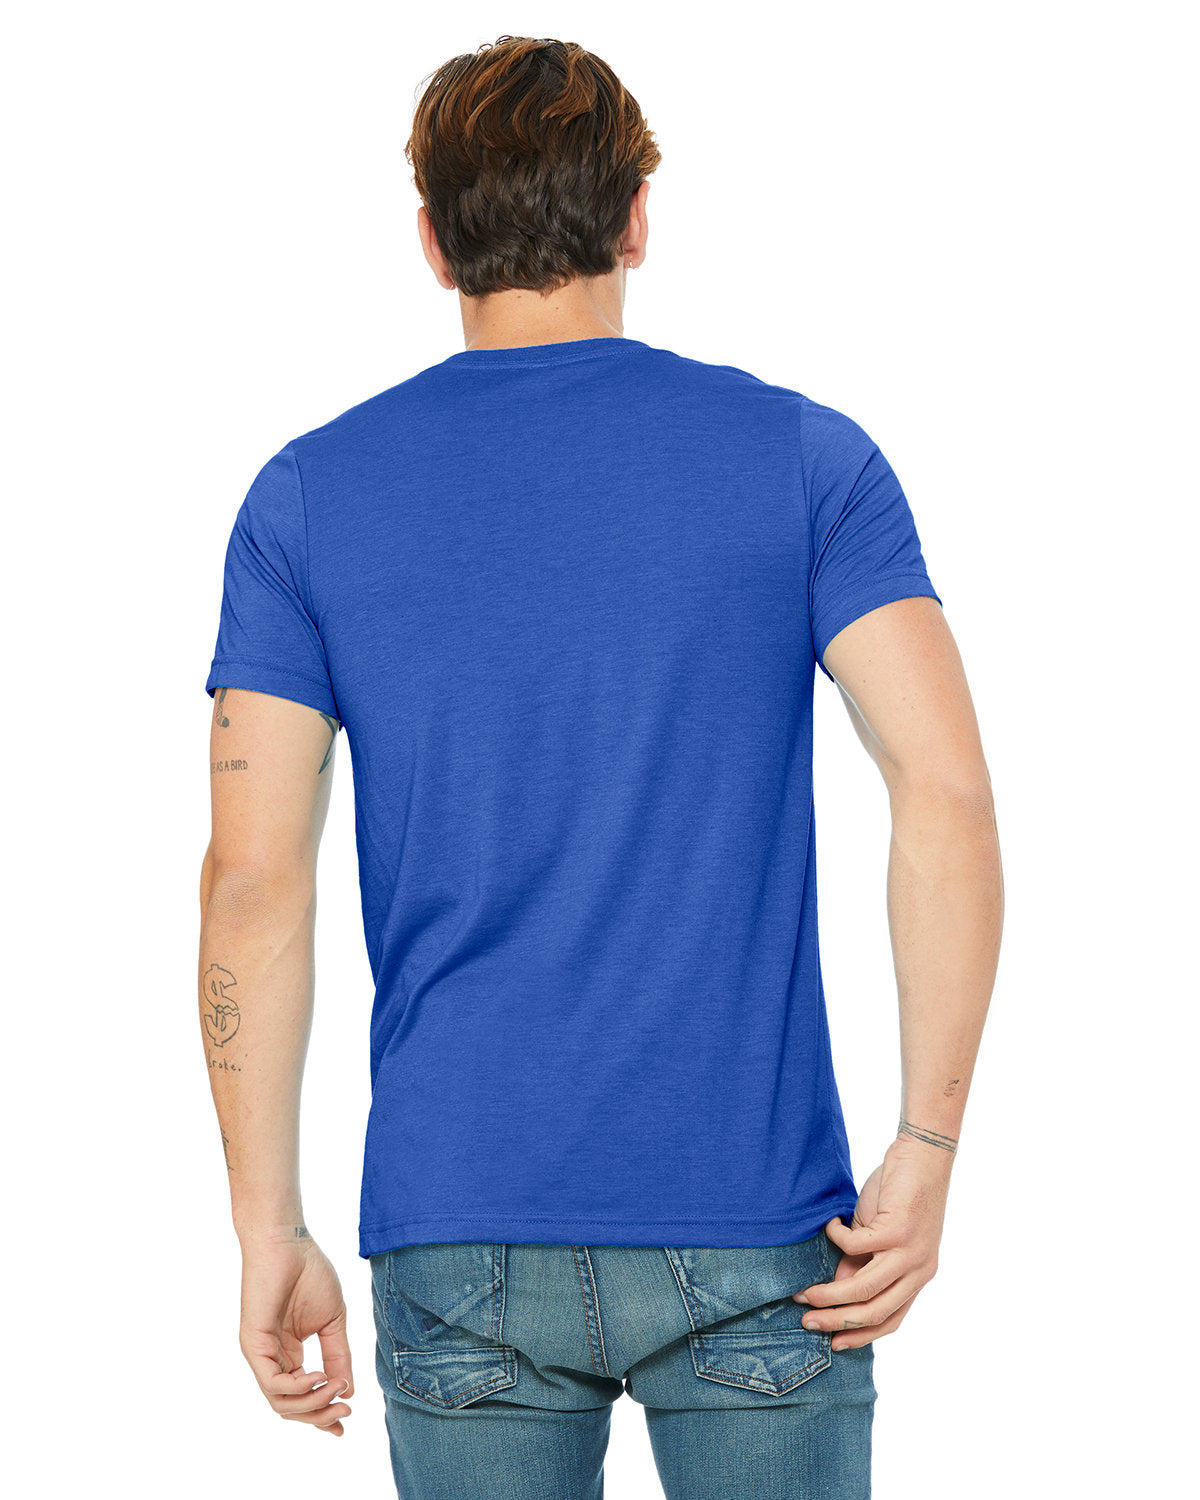 UNISEX Short-Sleeve V-Neck T-Shirt